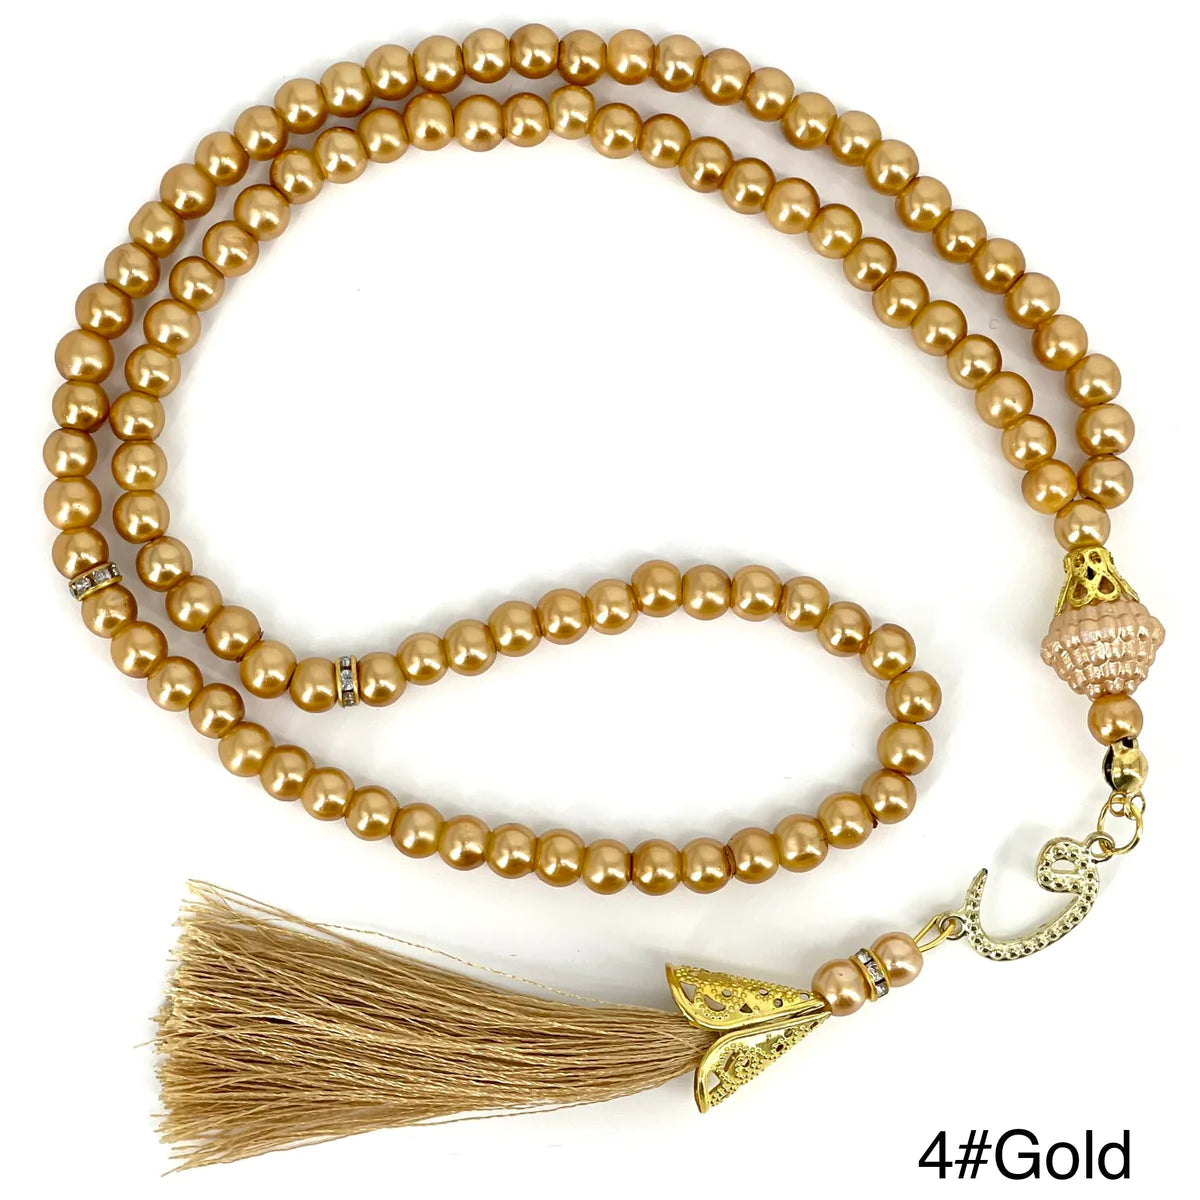 Tasbeeh 99 Beads 4#Gold